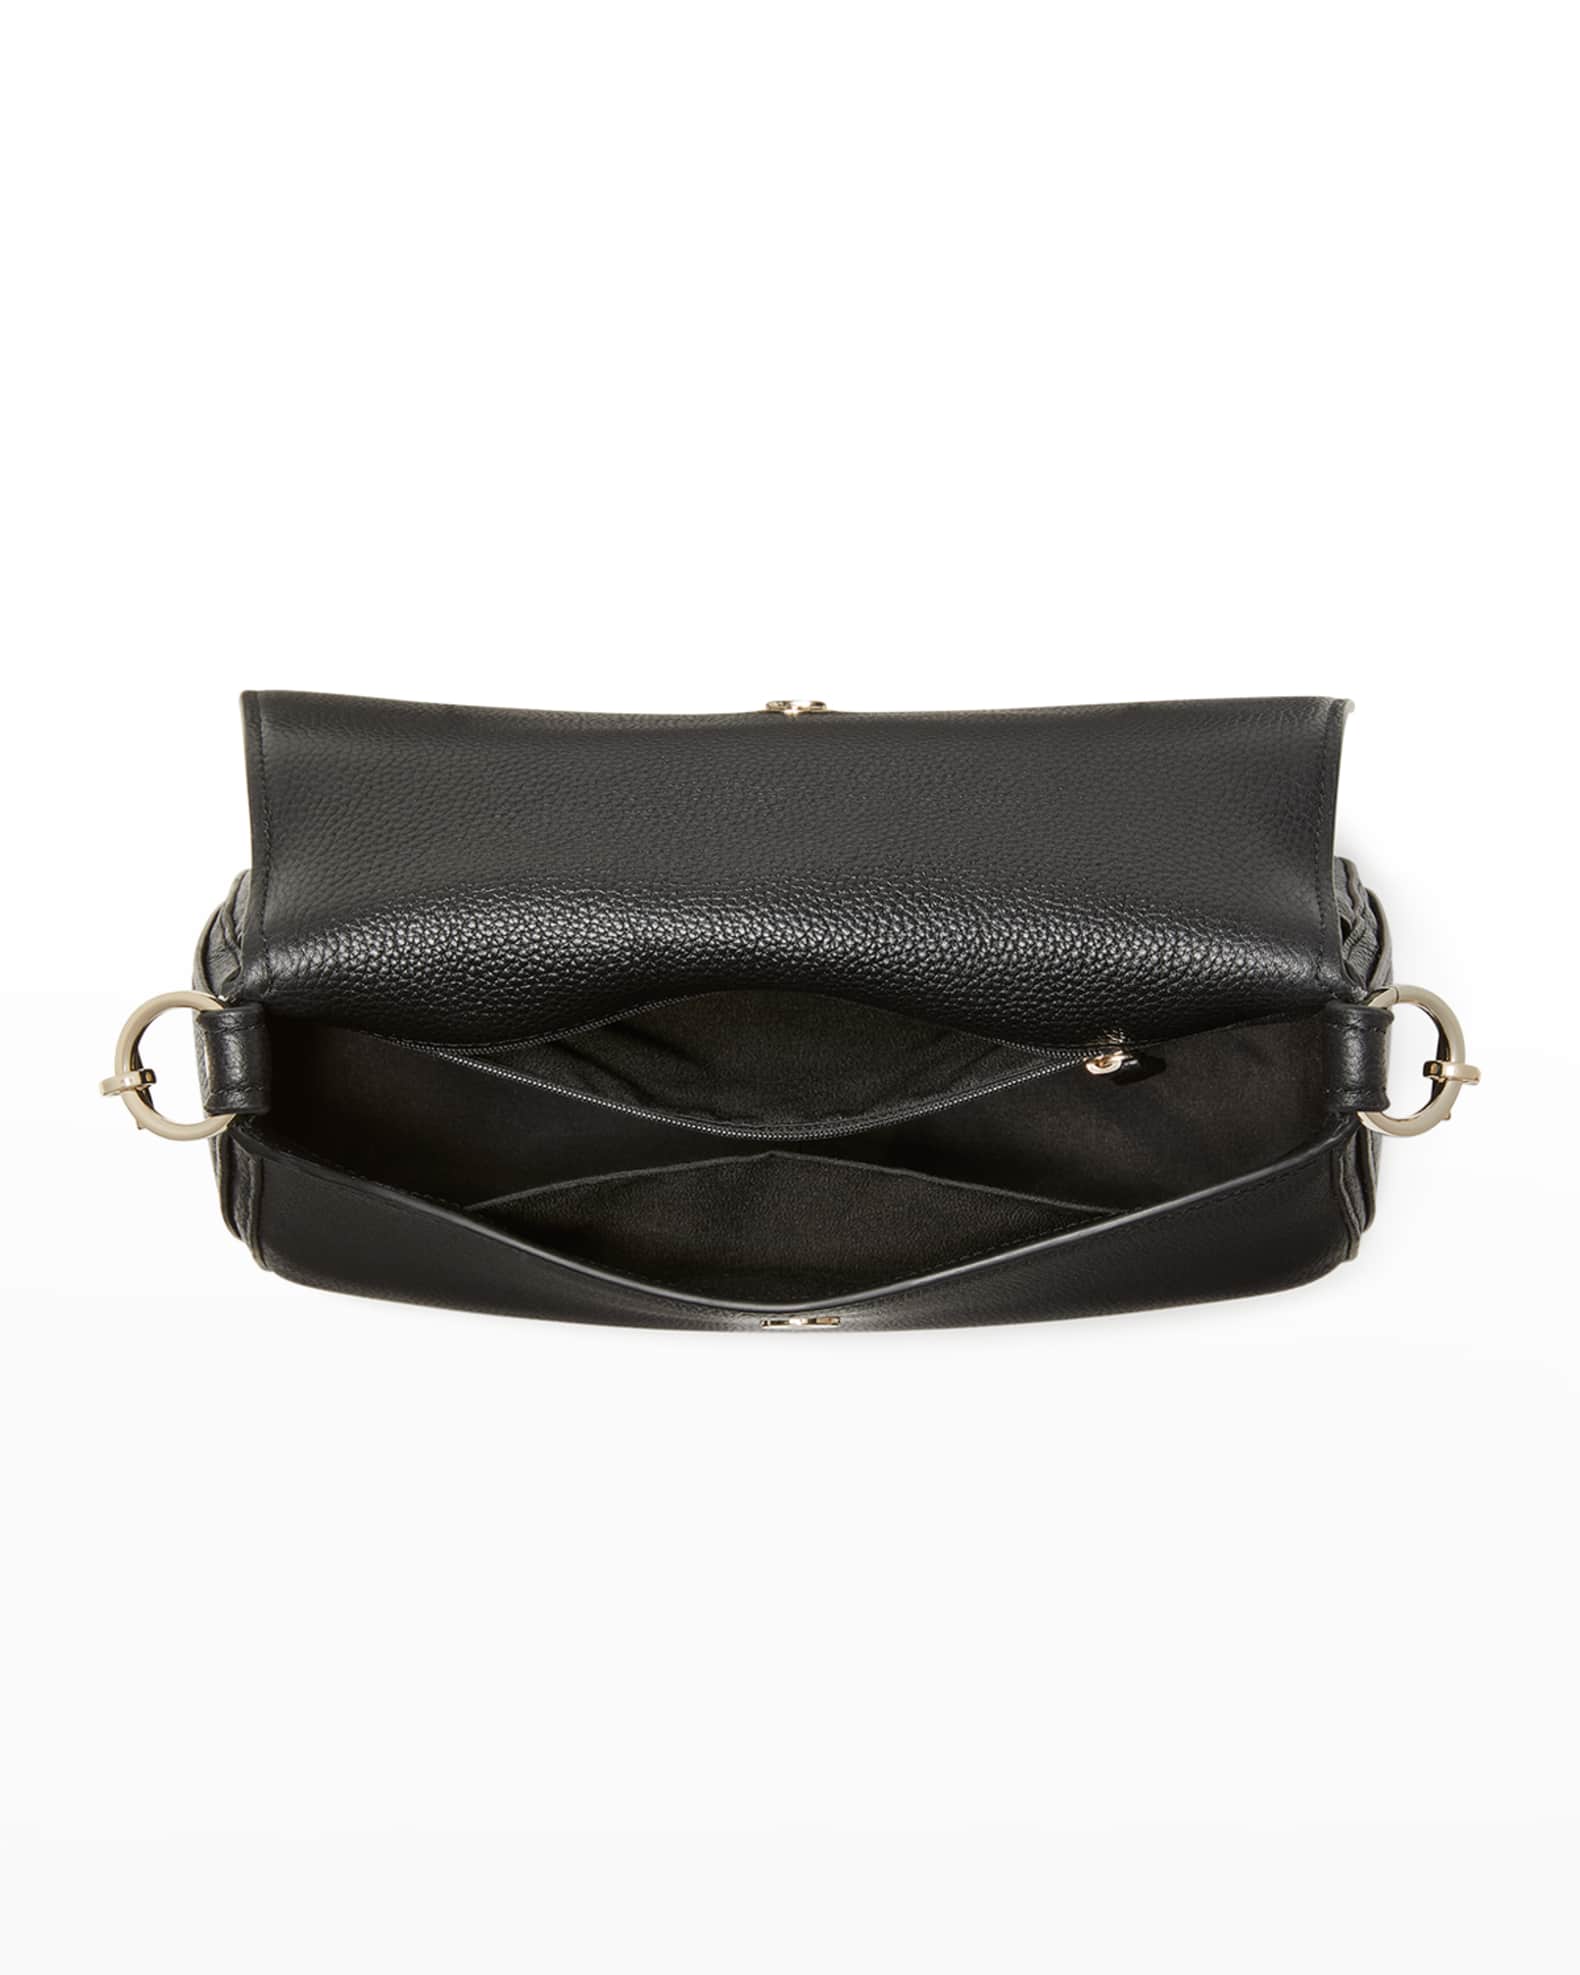 kate spade new york medium convertible leather shoulder bag | Neiman Marcus